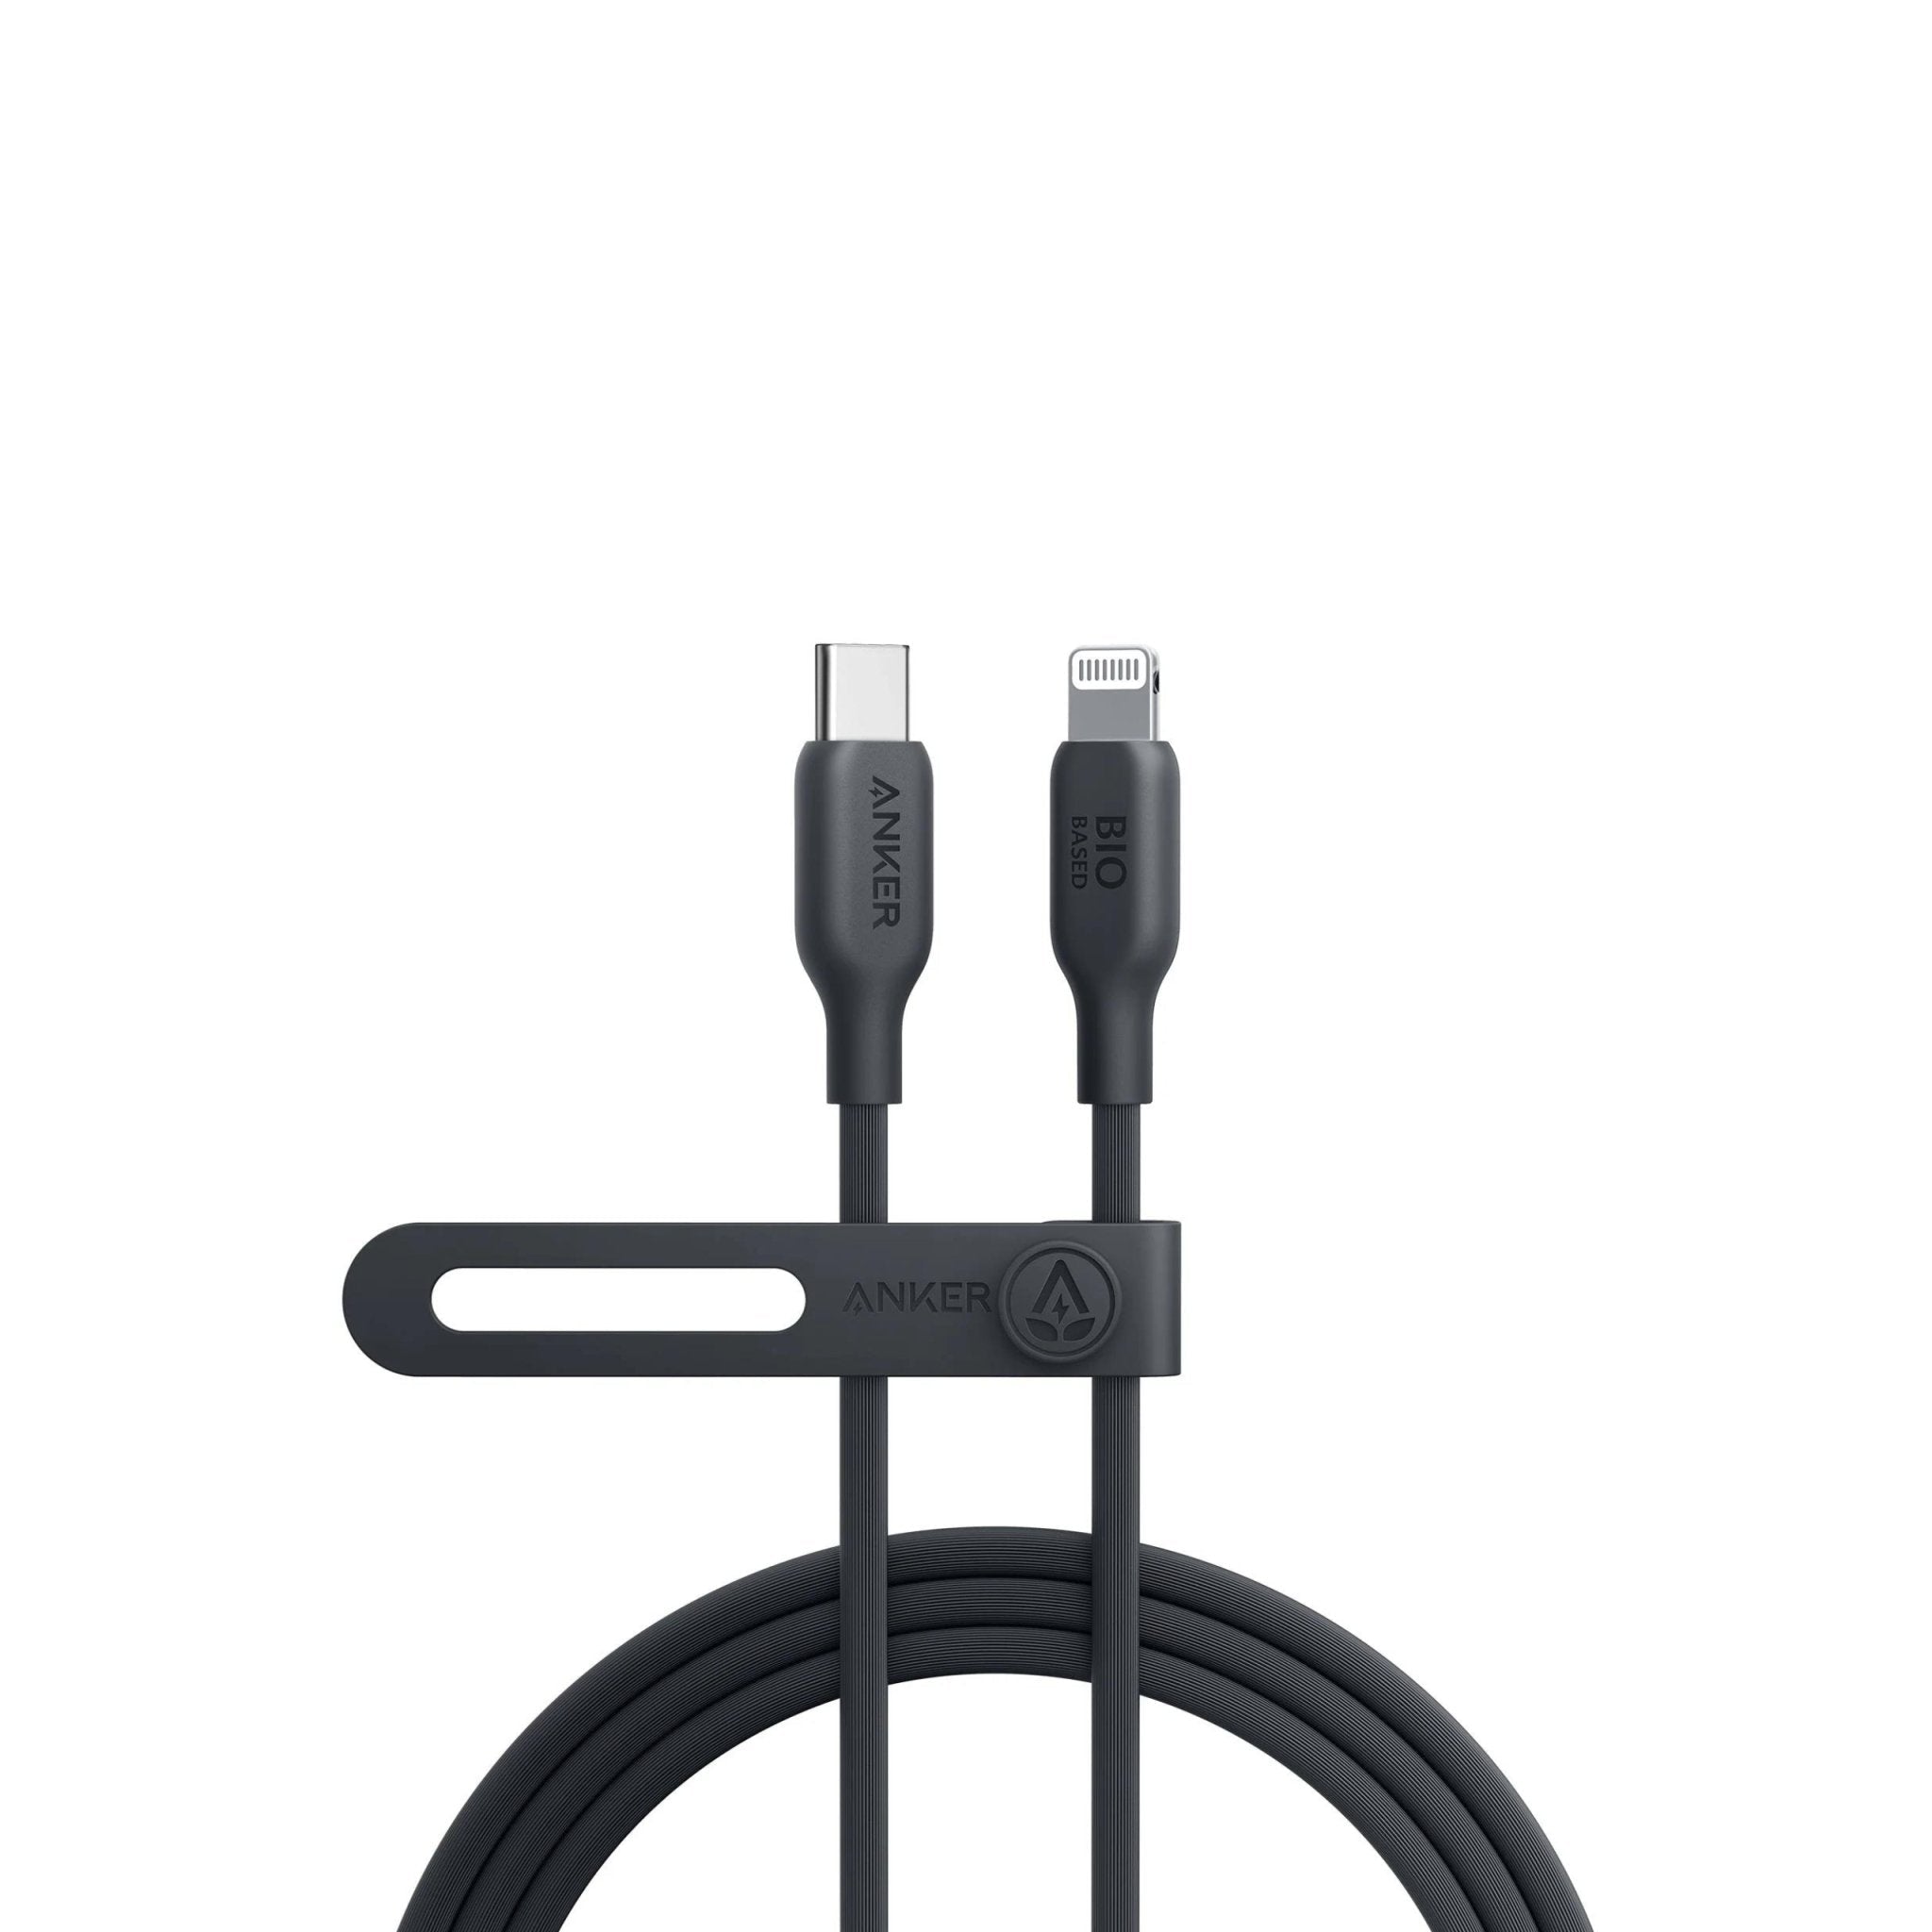 Anker 542 USB-C to Lightning Cable Bio-Based (0.9M) - Black